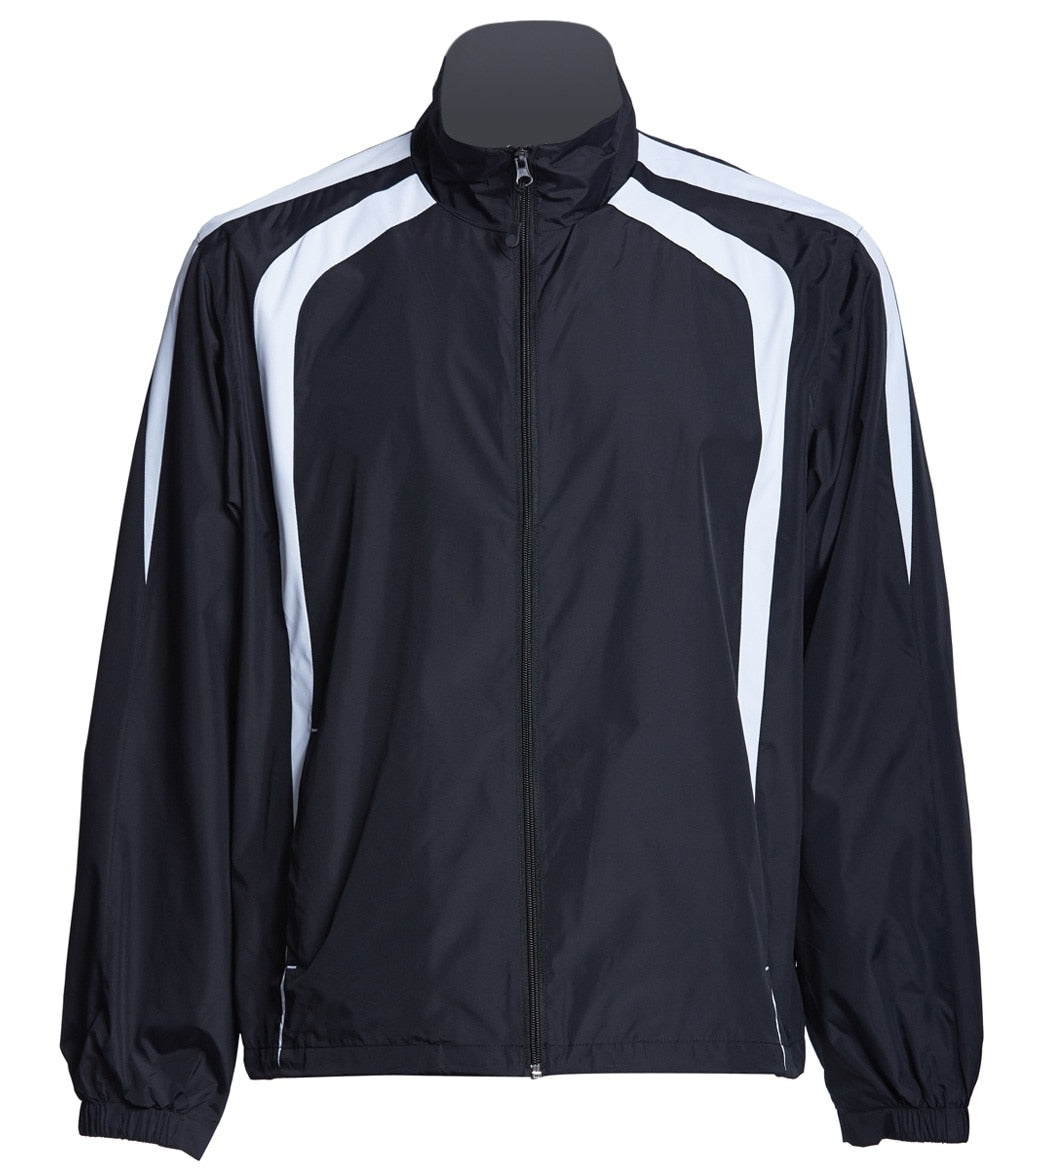 Men's Warm Up Jacket - Black/White Medium Polyester - Swimoutlet.com